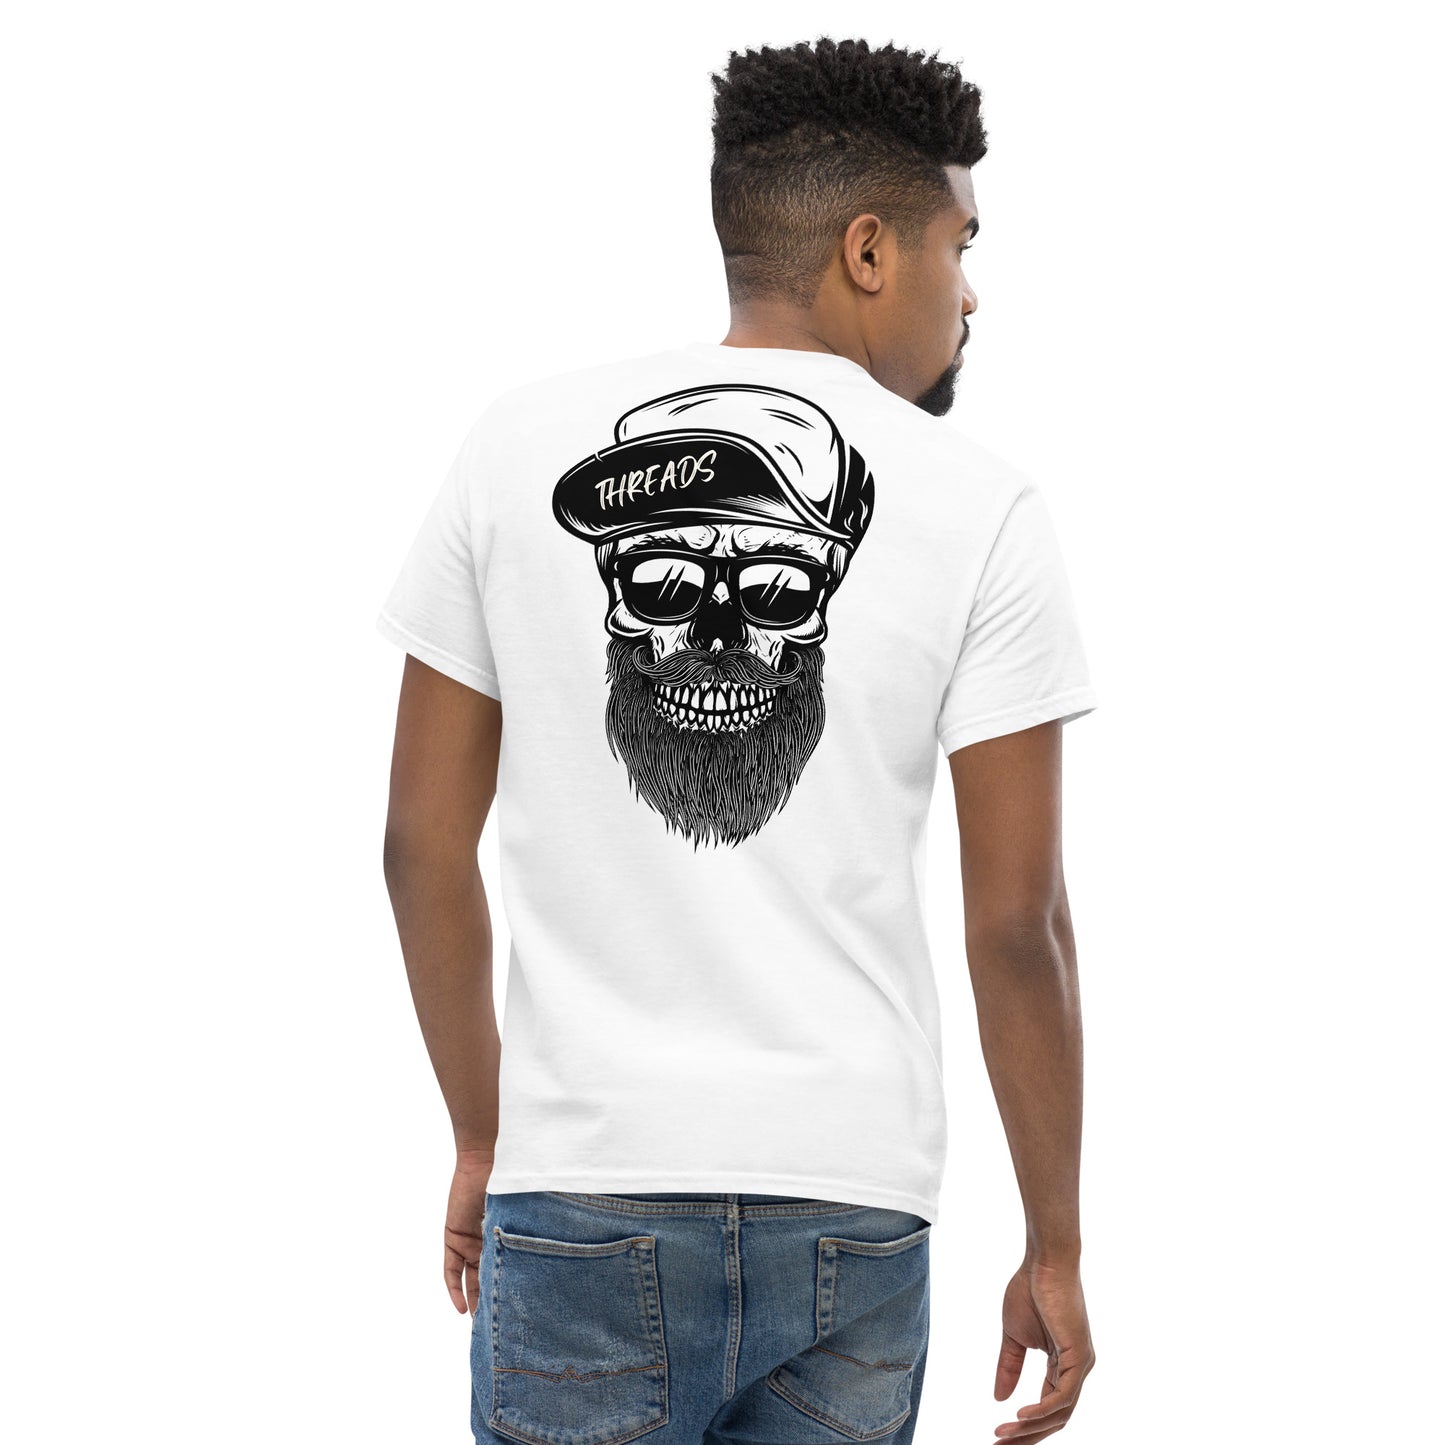 Beard Grylls T-shirt